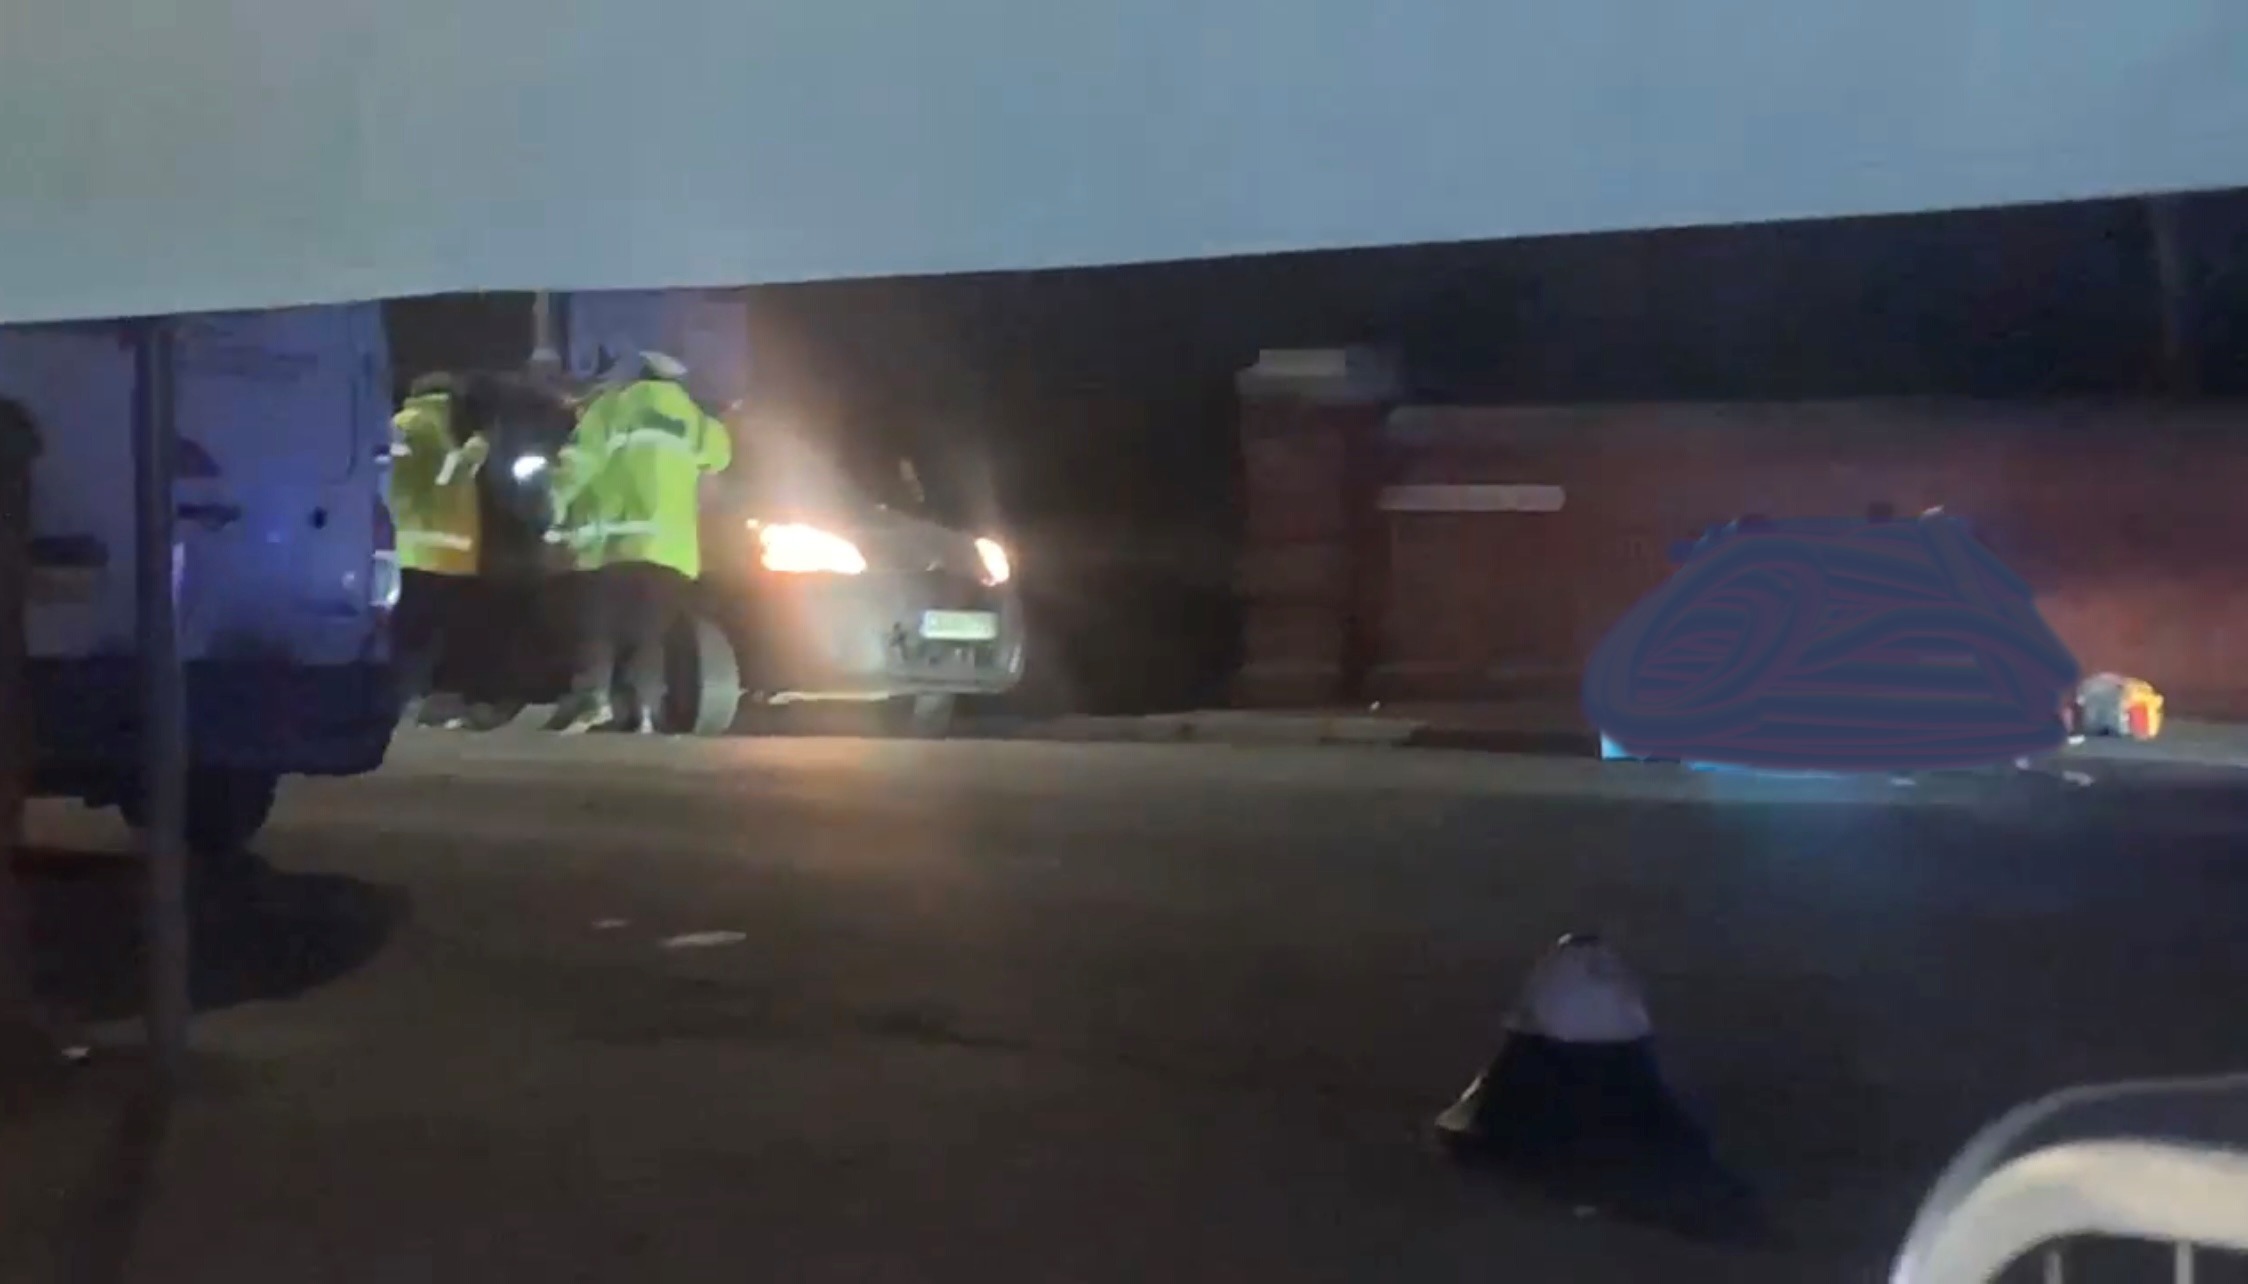 Footage shows someone was injured at Eastbury Road. Credit: UGC